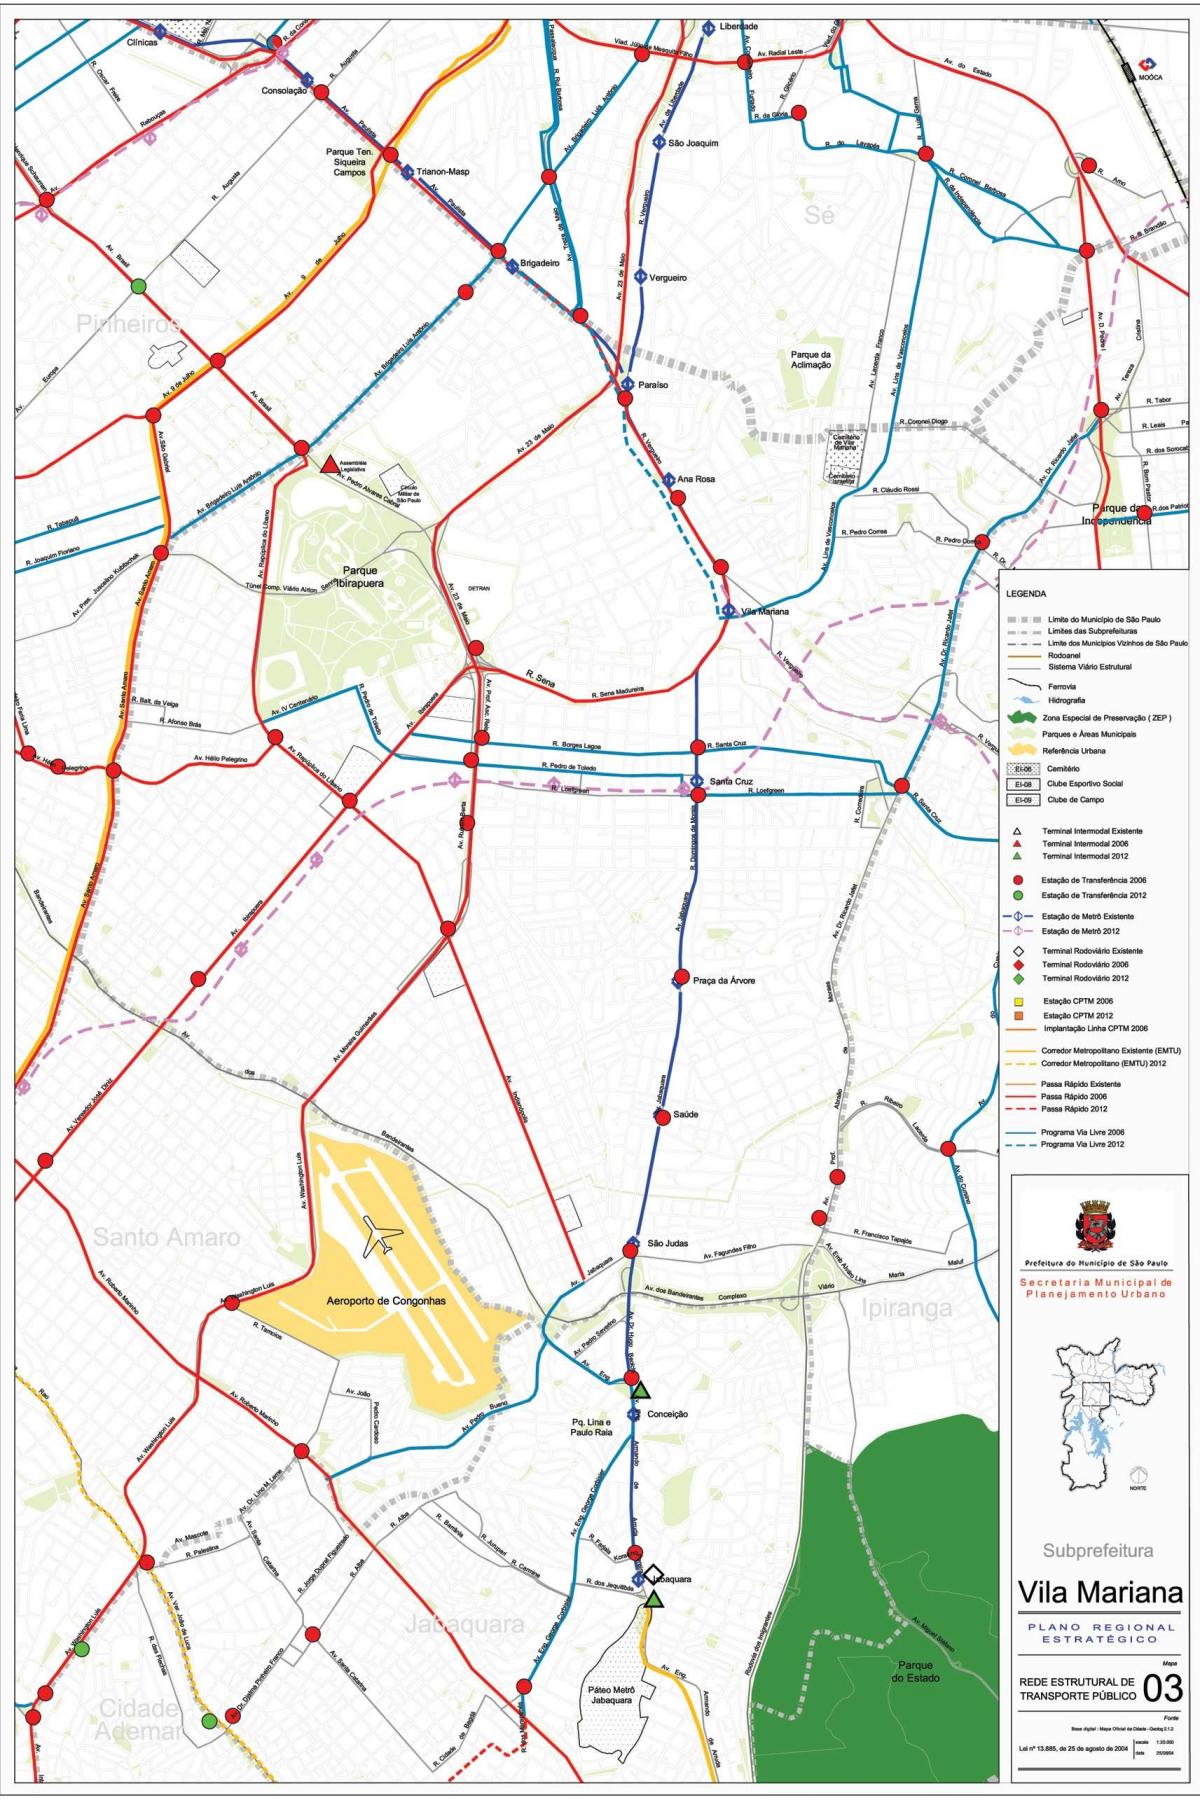 Map of Vila Mariana São Paulo - Public transports